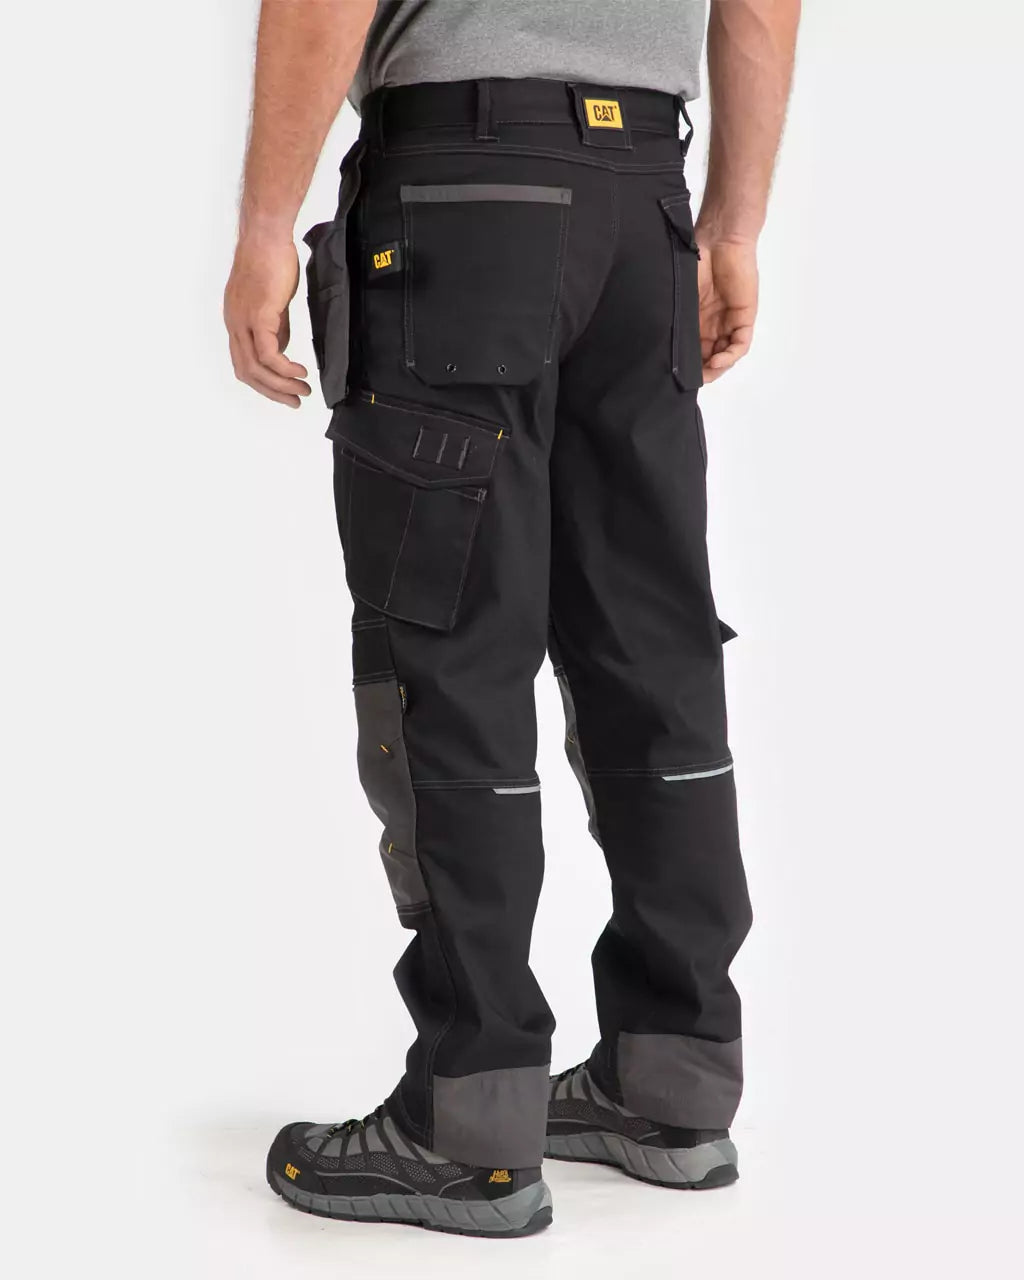 cat workwear men h2o defender trouser black graphite 1810008 10109 bl